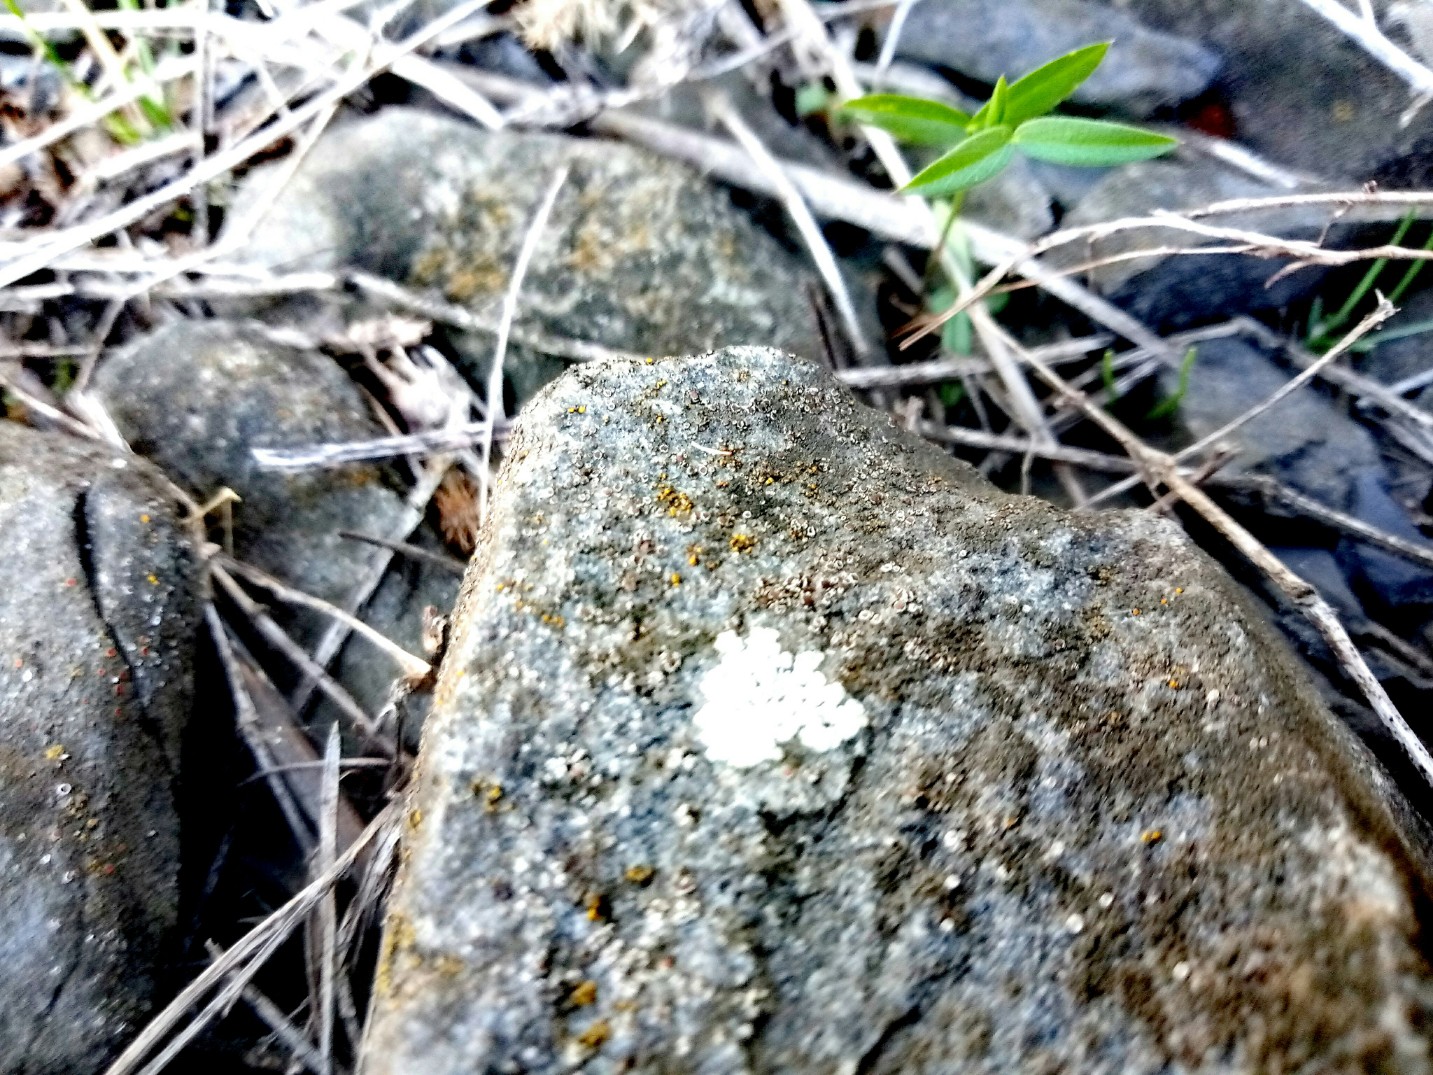 lichens on stones photo 5